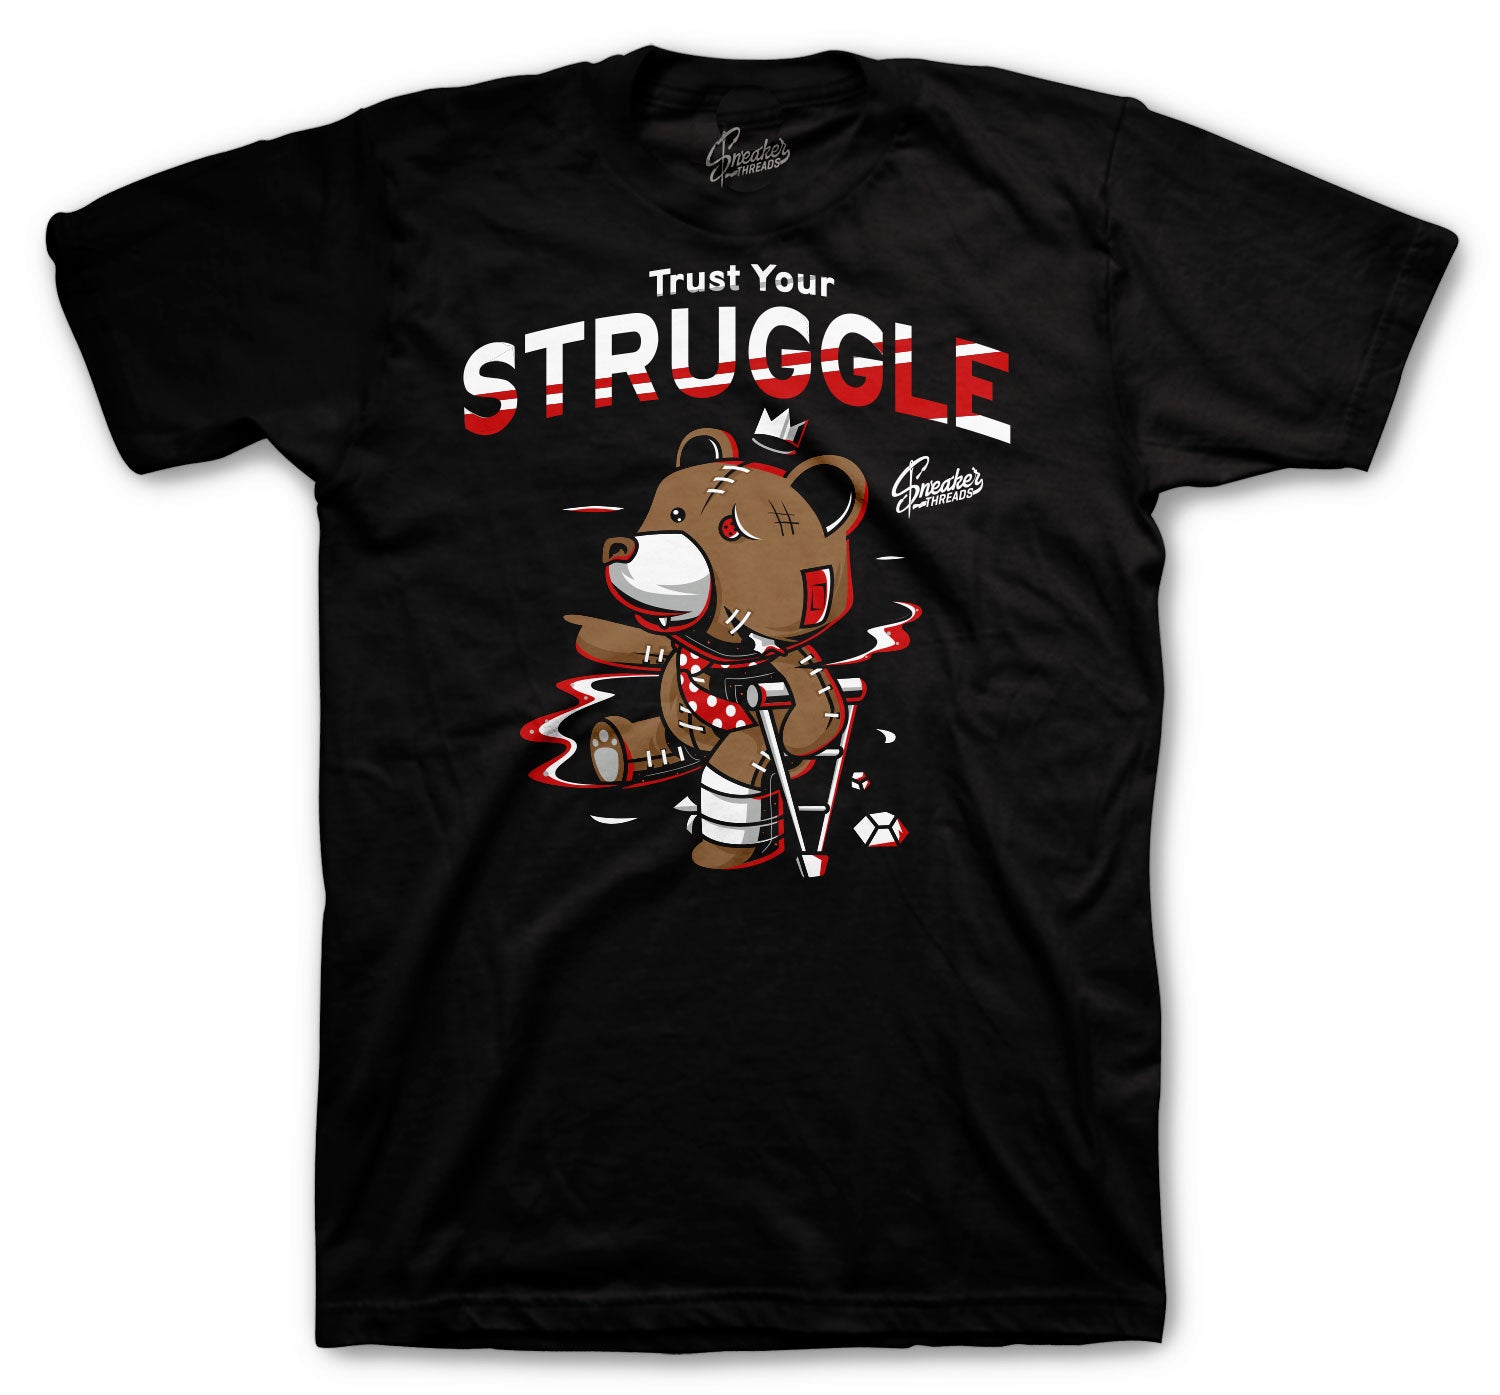 Retro 6 Carmine Shirt - Trust Your Struggle - Black